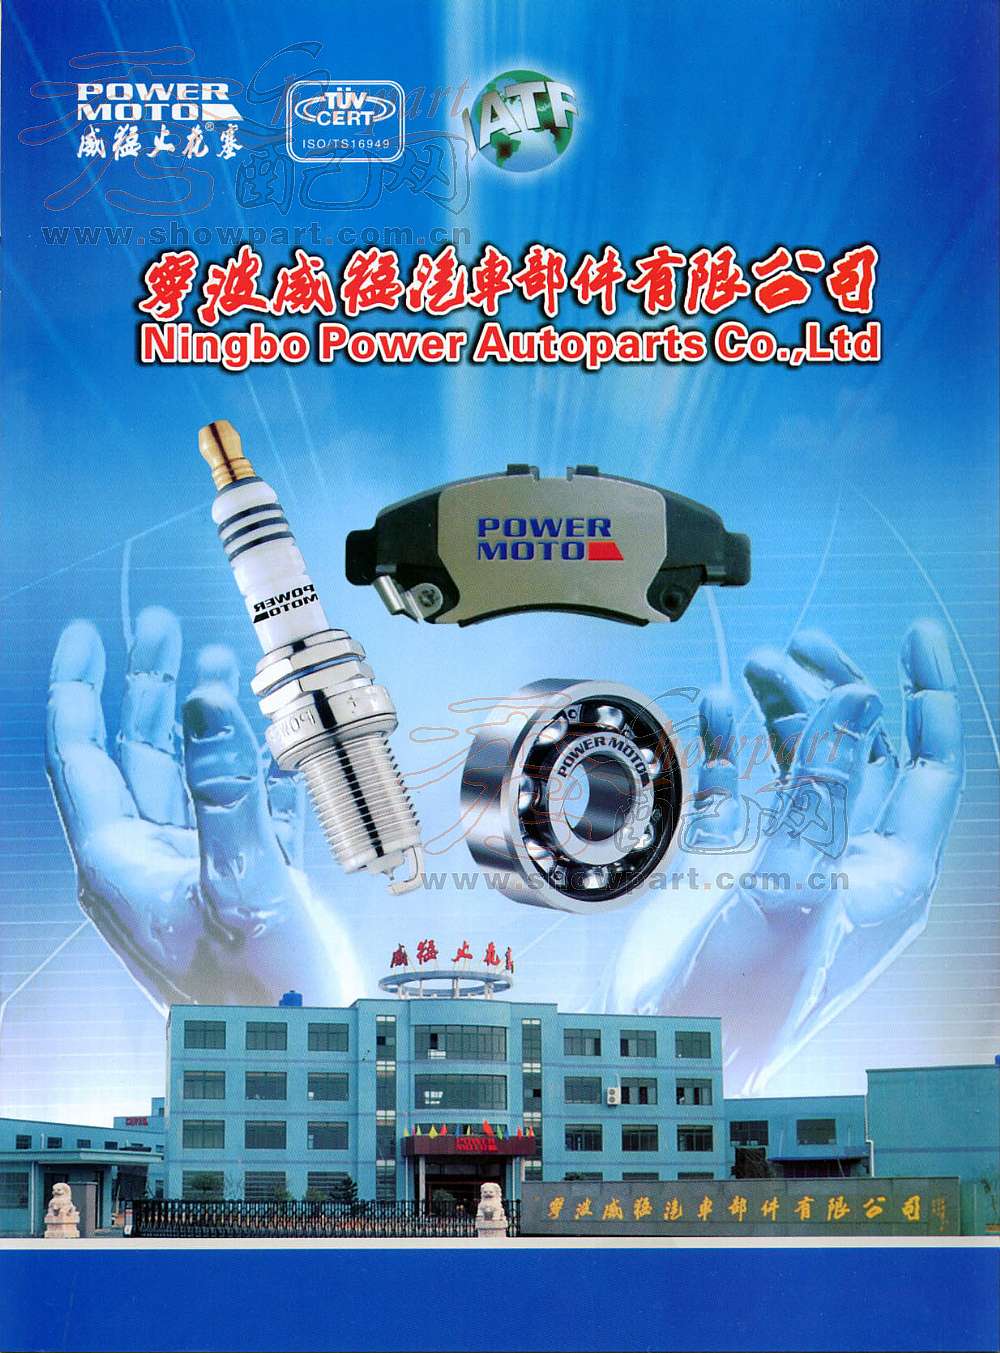 Ningbo Power Autoparts Co.,Ltd